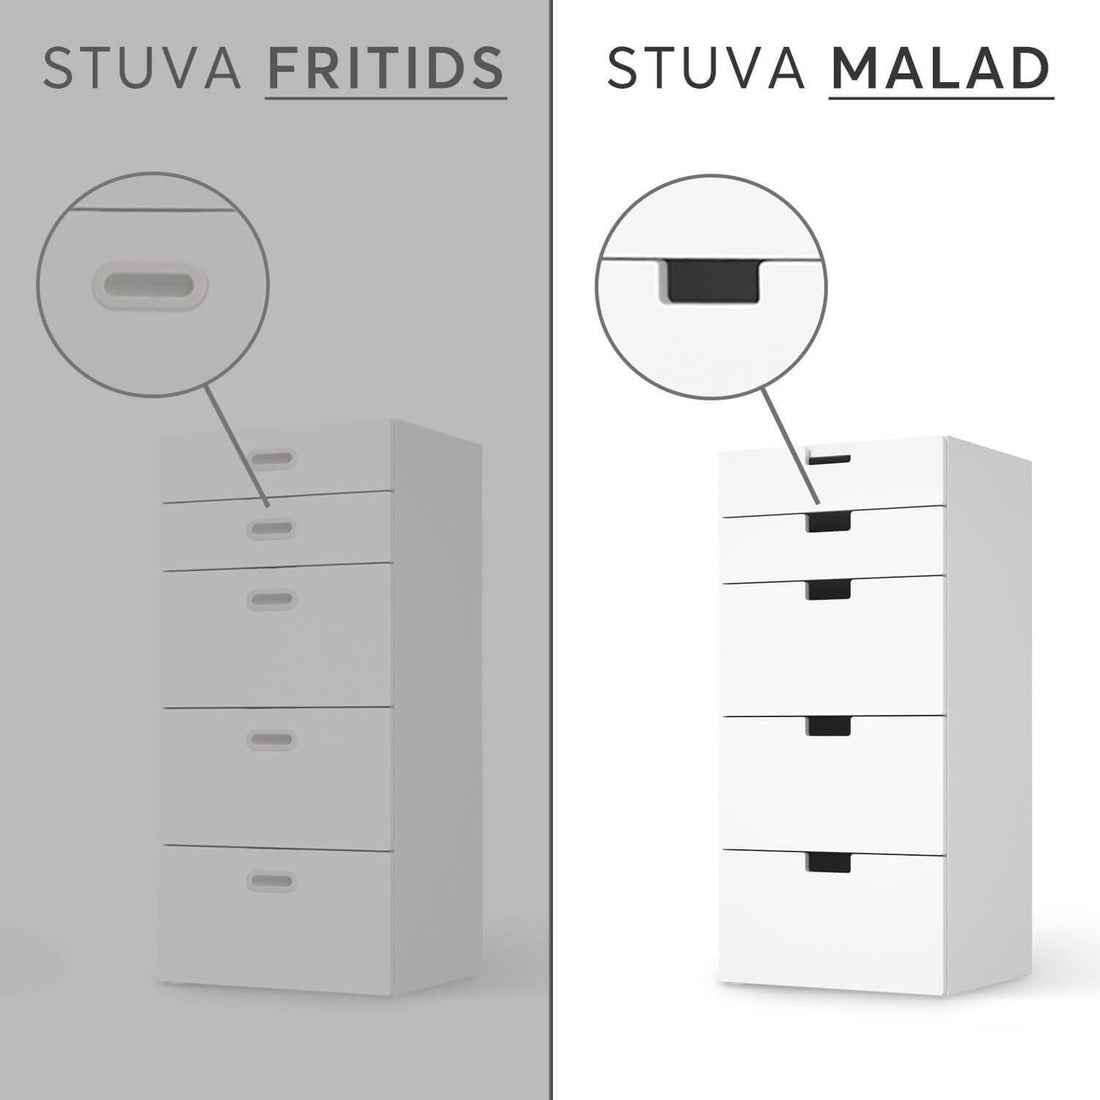 Vergleich IKEA Stuva Malad / Fritids - The sky is the limit